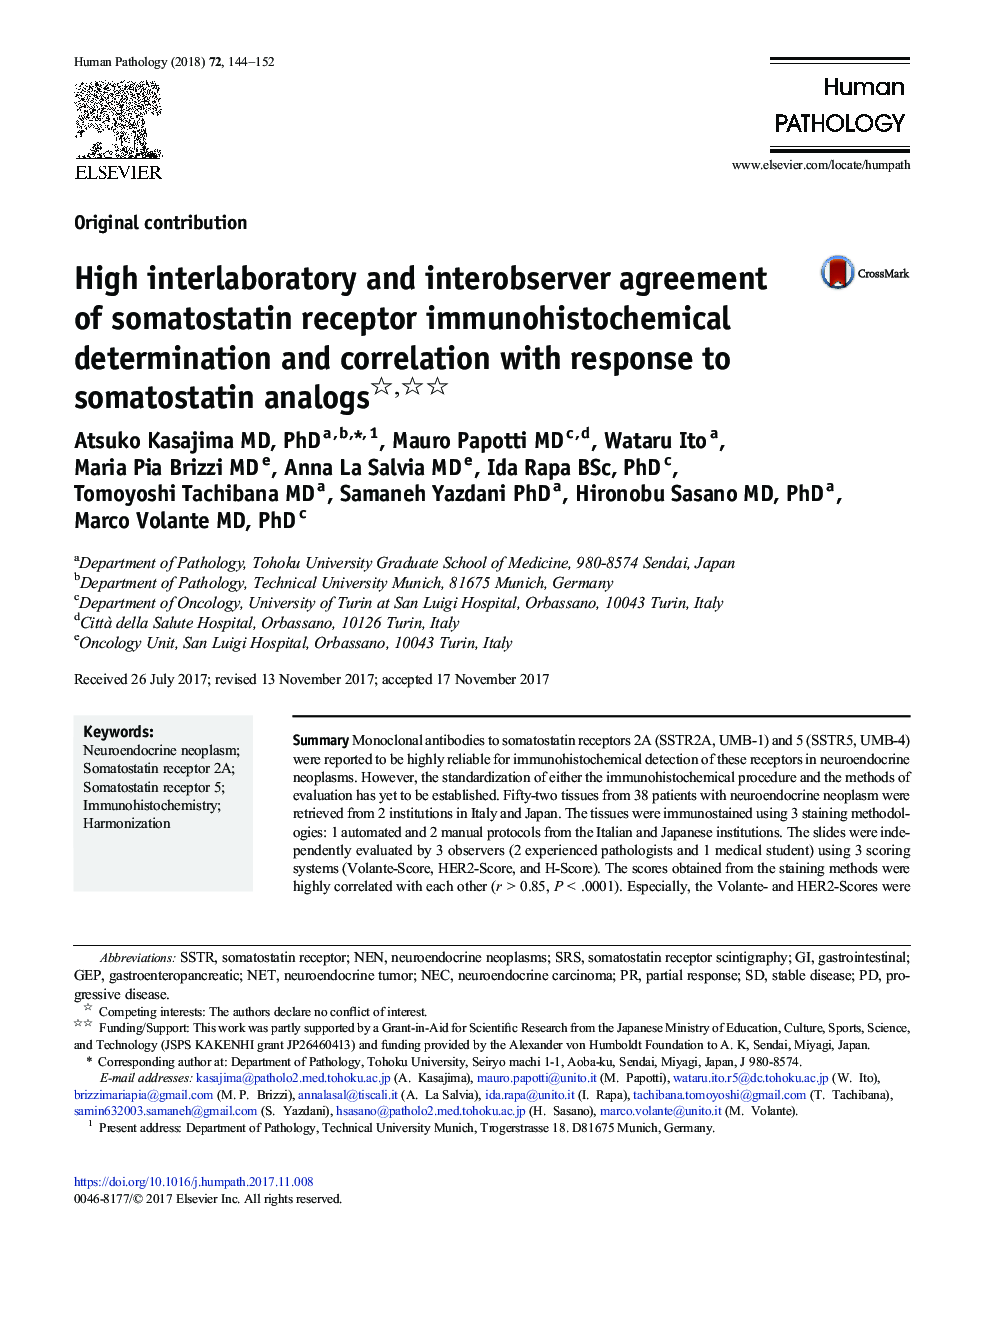 High interlaboratory and interobserver agreement of somatostatin receptor immunohistochemical determination and correlation with response to somatostatin analogs